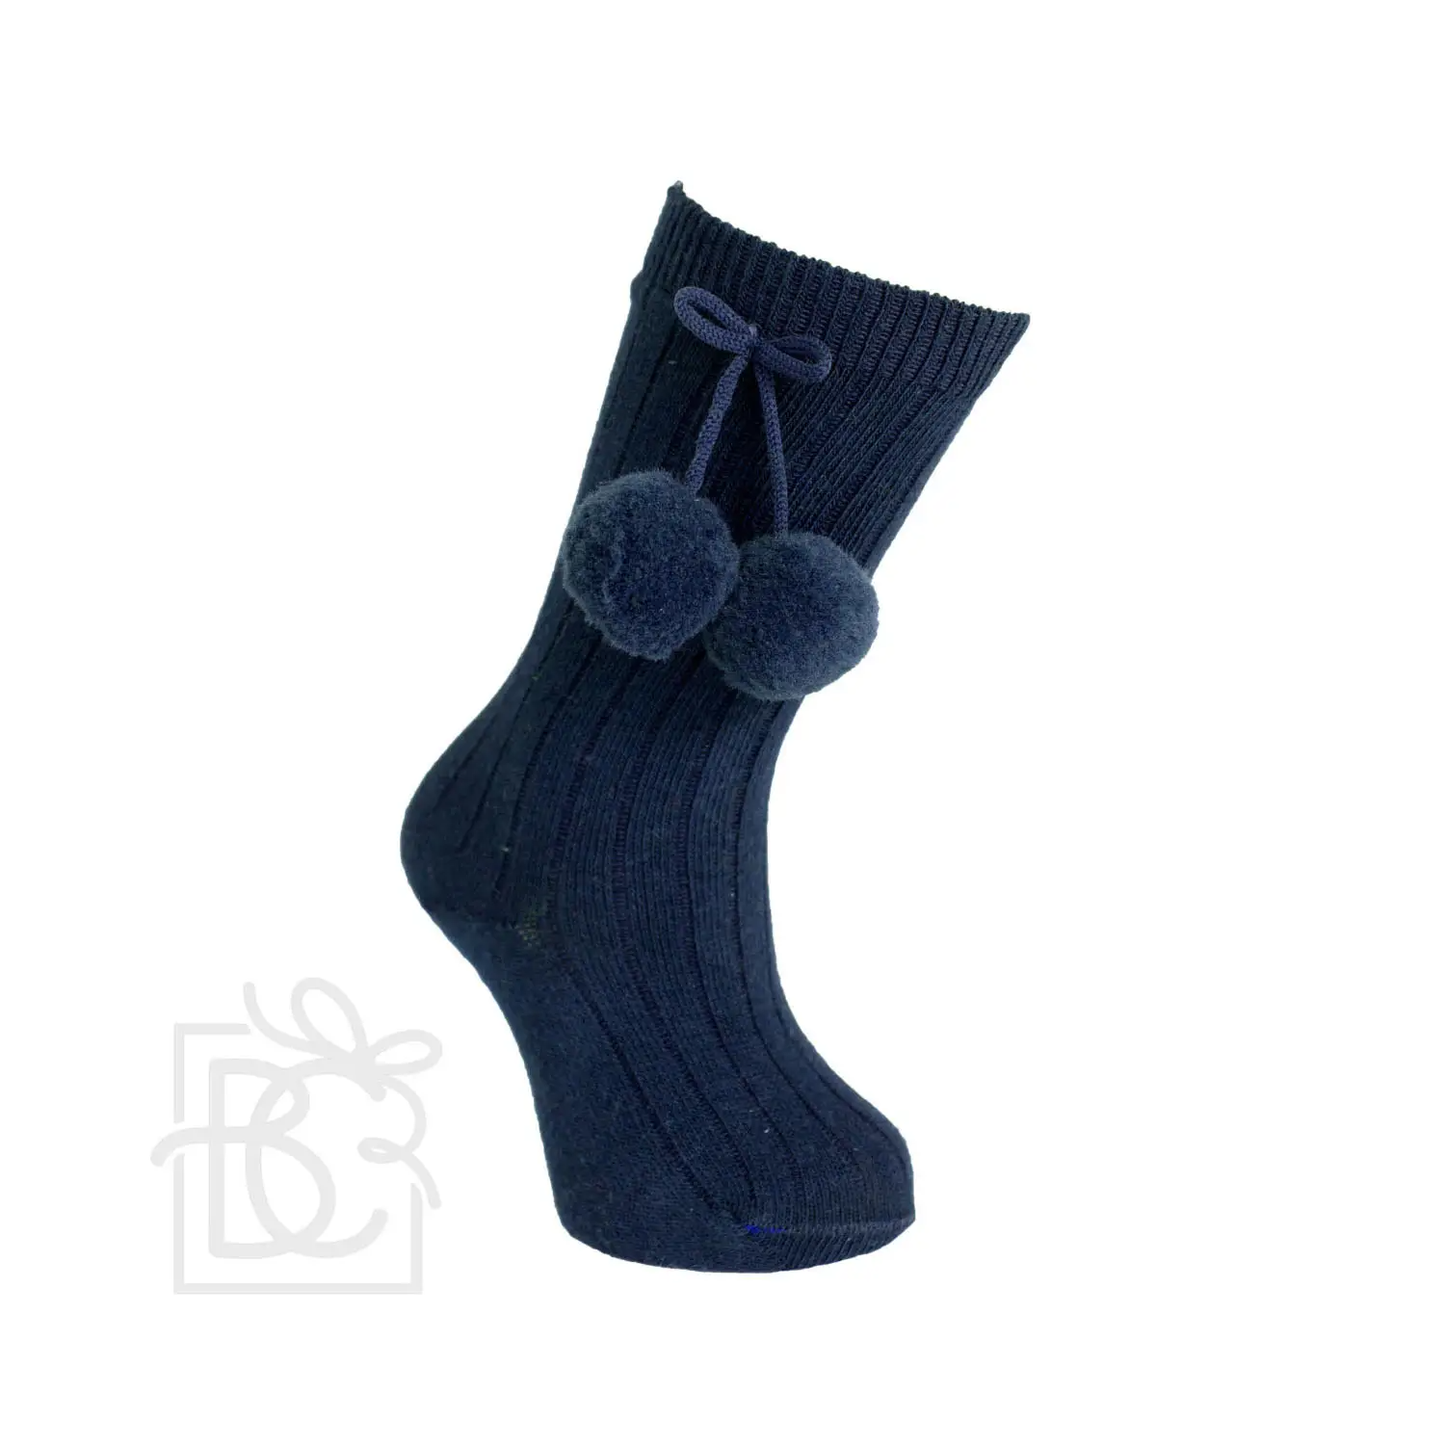 Carlomagno - Pom-Pom Knee High Socks Navy